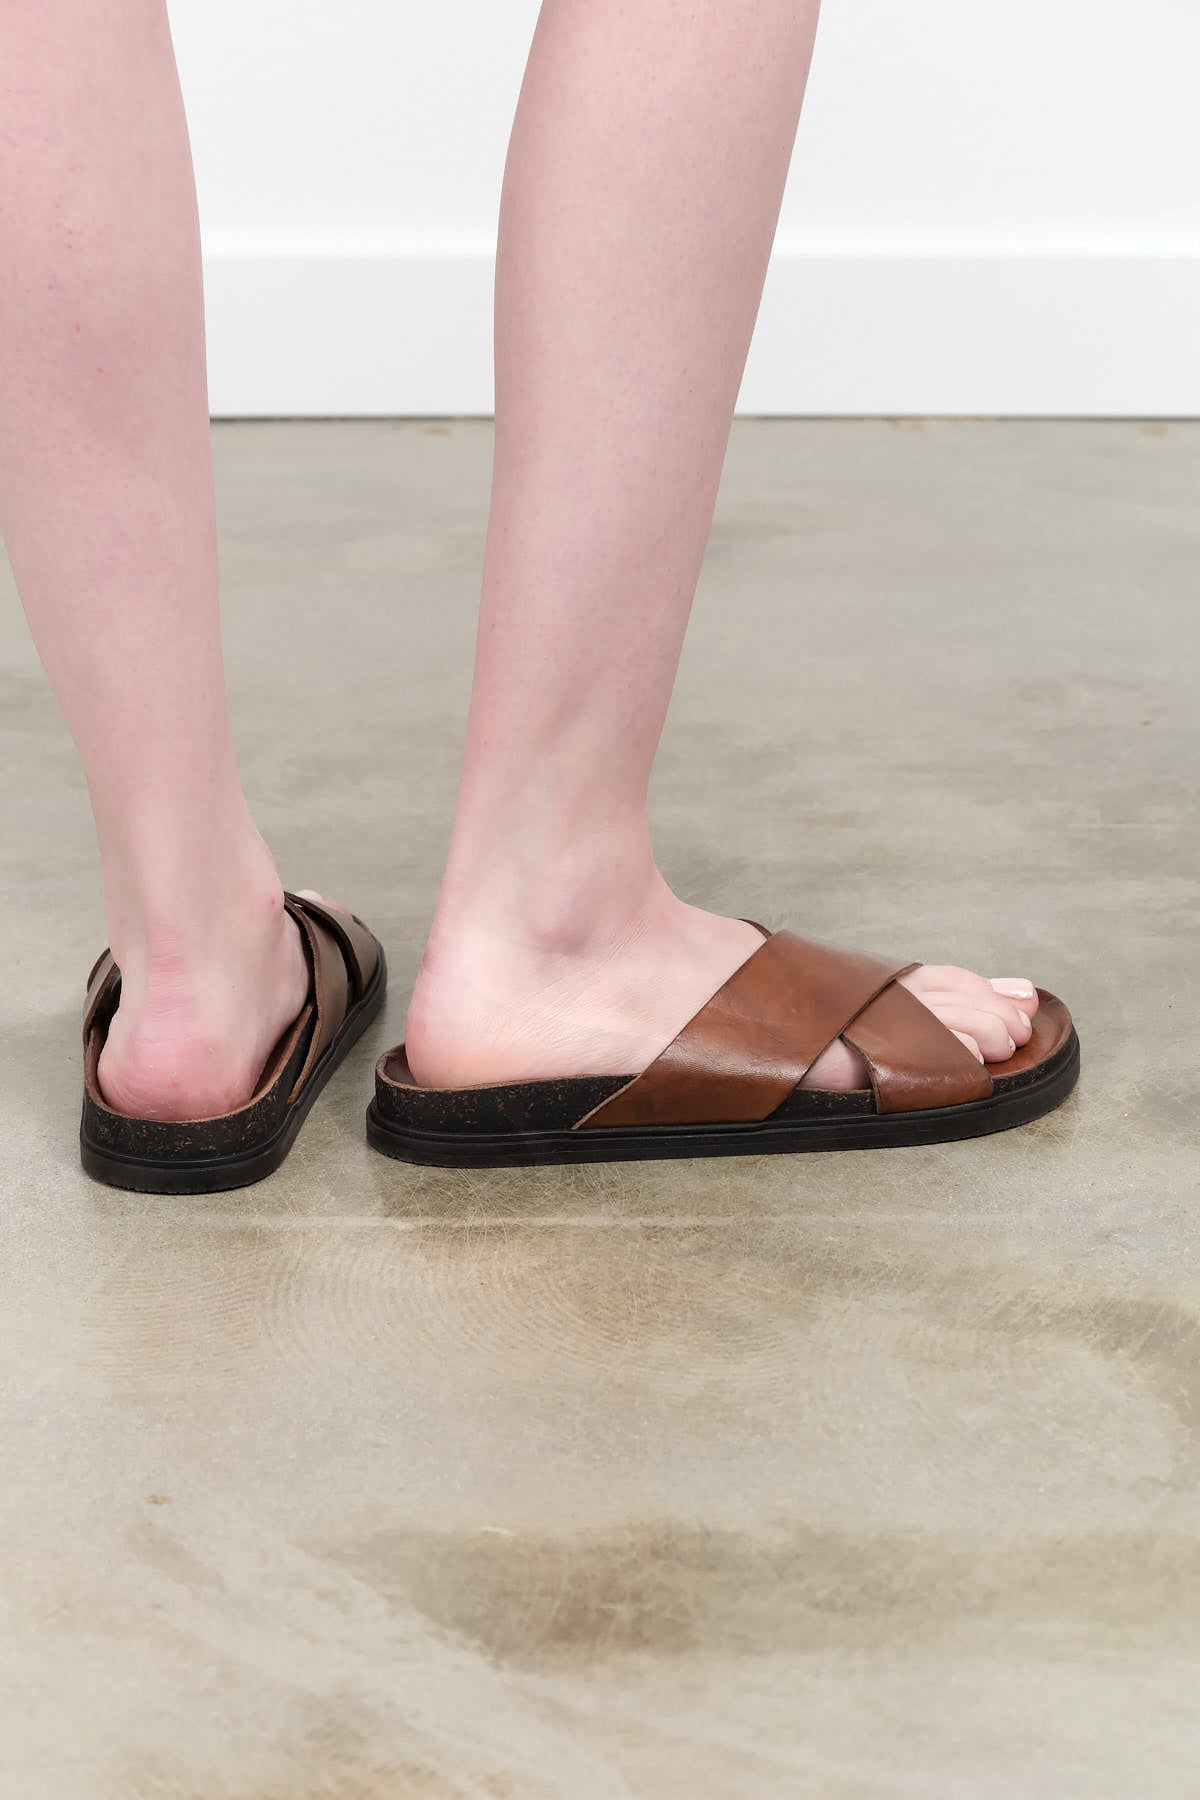 Mahogany Nami Cross Sandal by Brador Shoes